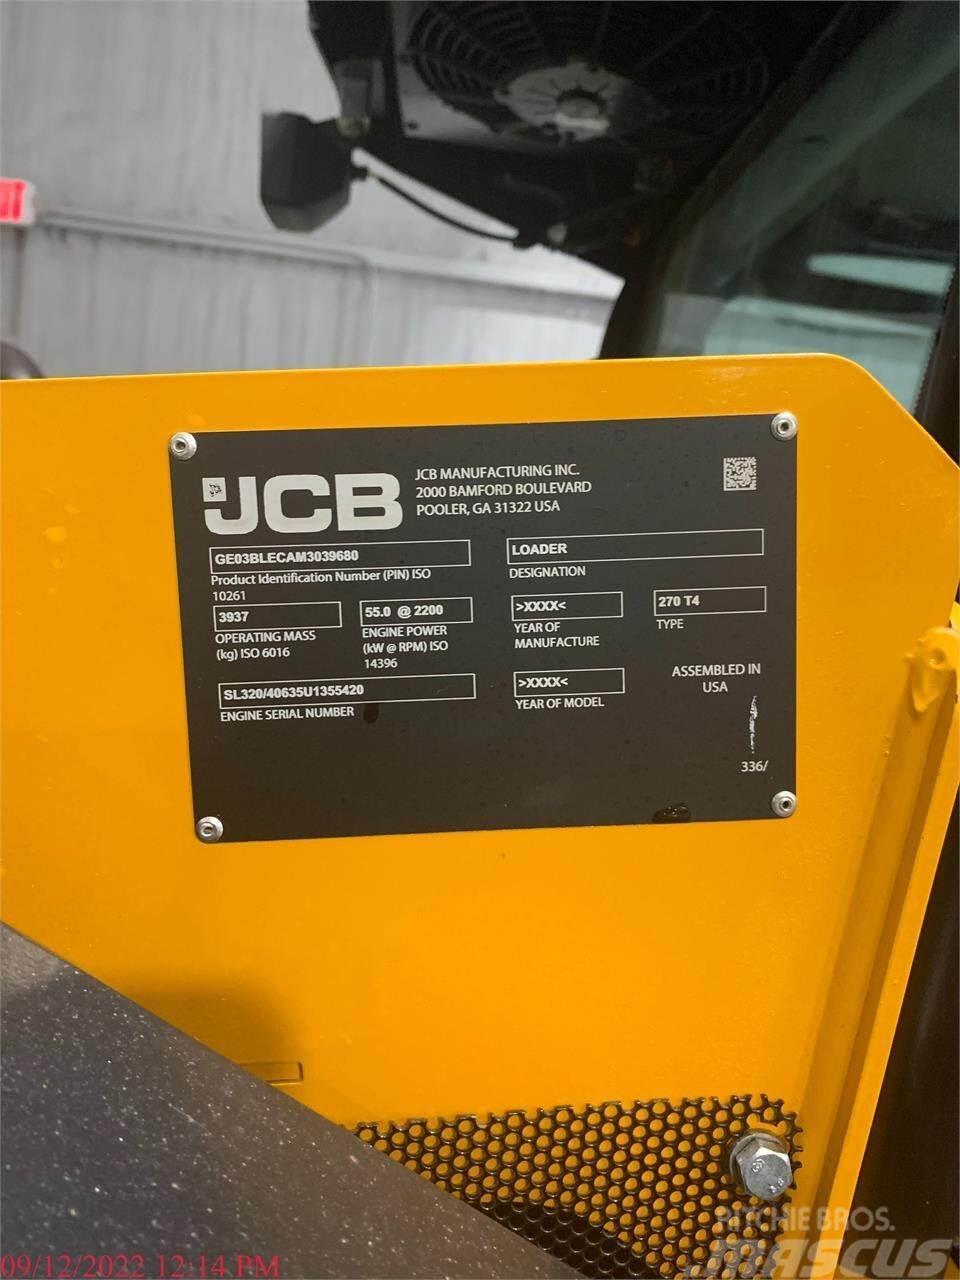 JCB 270 Kompaktlader